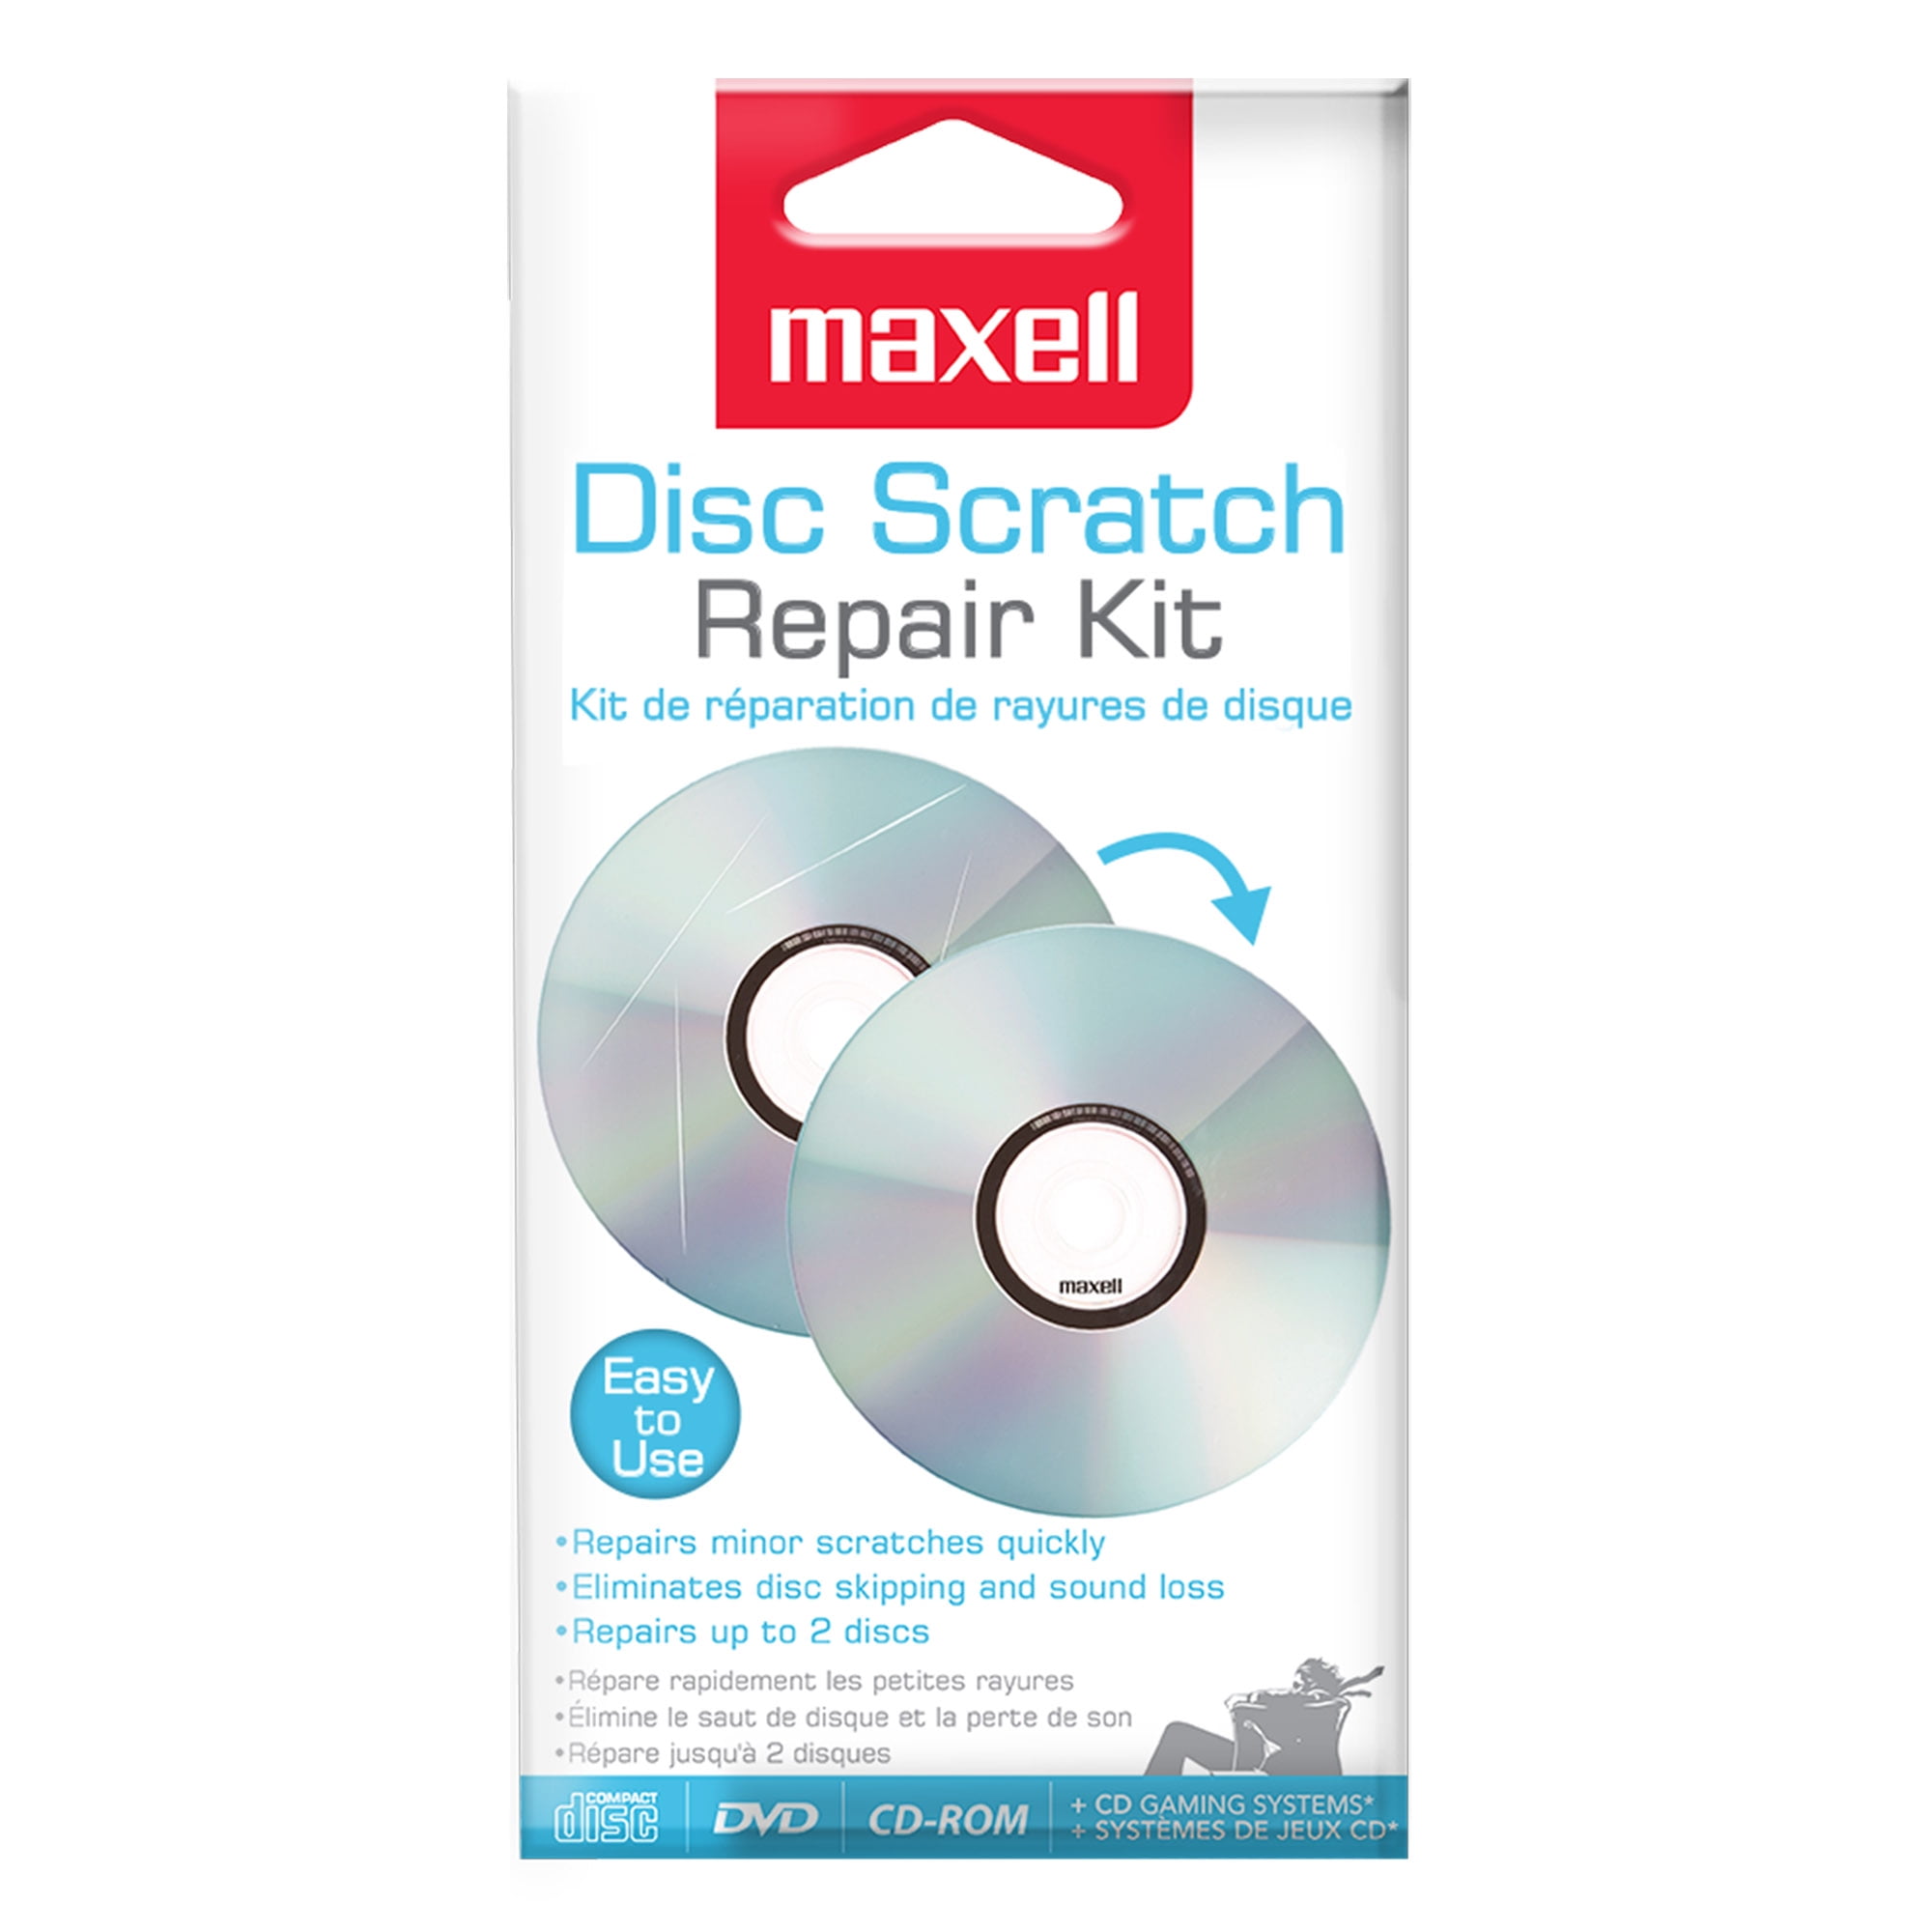 Maxell DVD-335 DVD scratch repair kit at Crutchfield